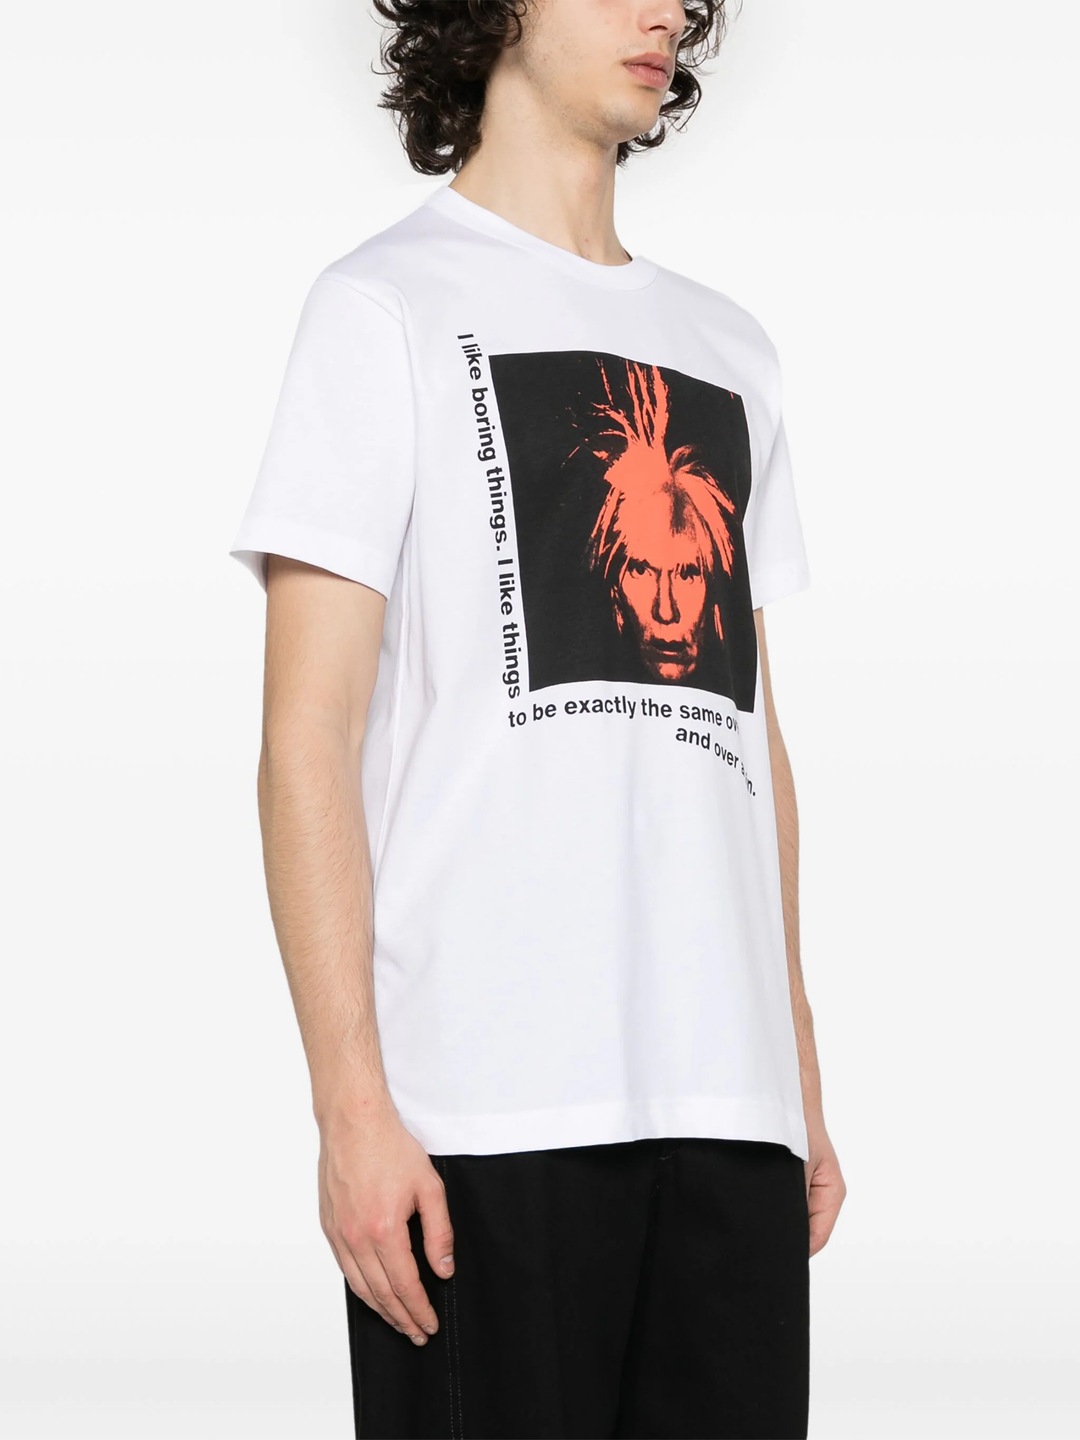 Andy Warhol X CDG Shirt Tee